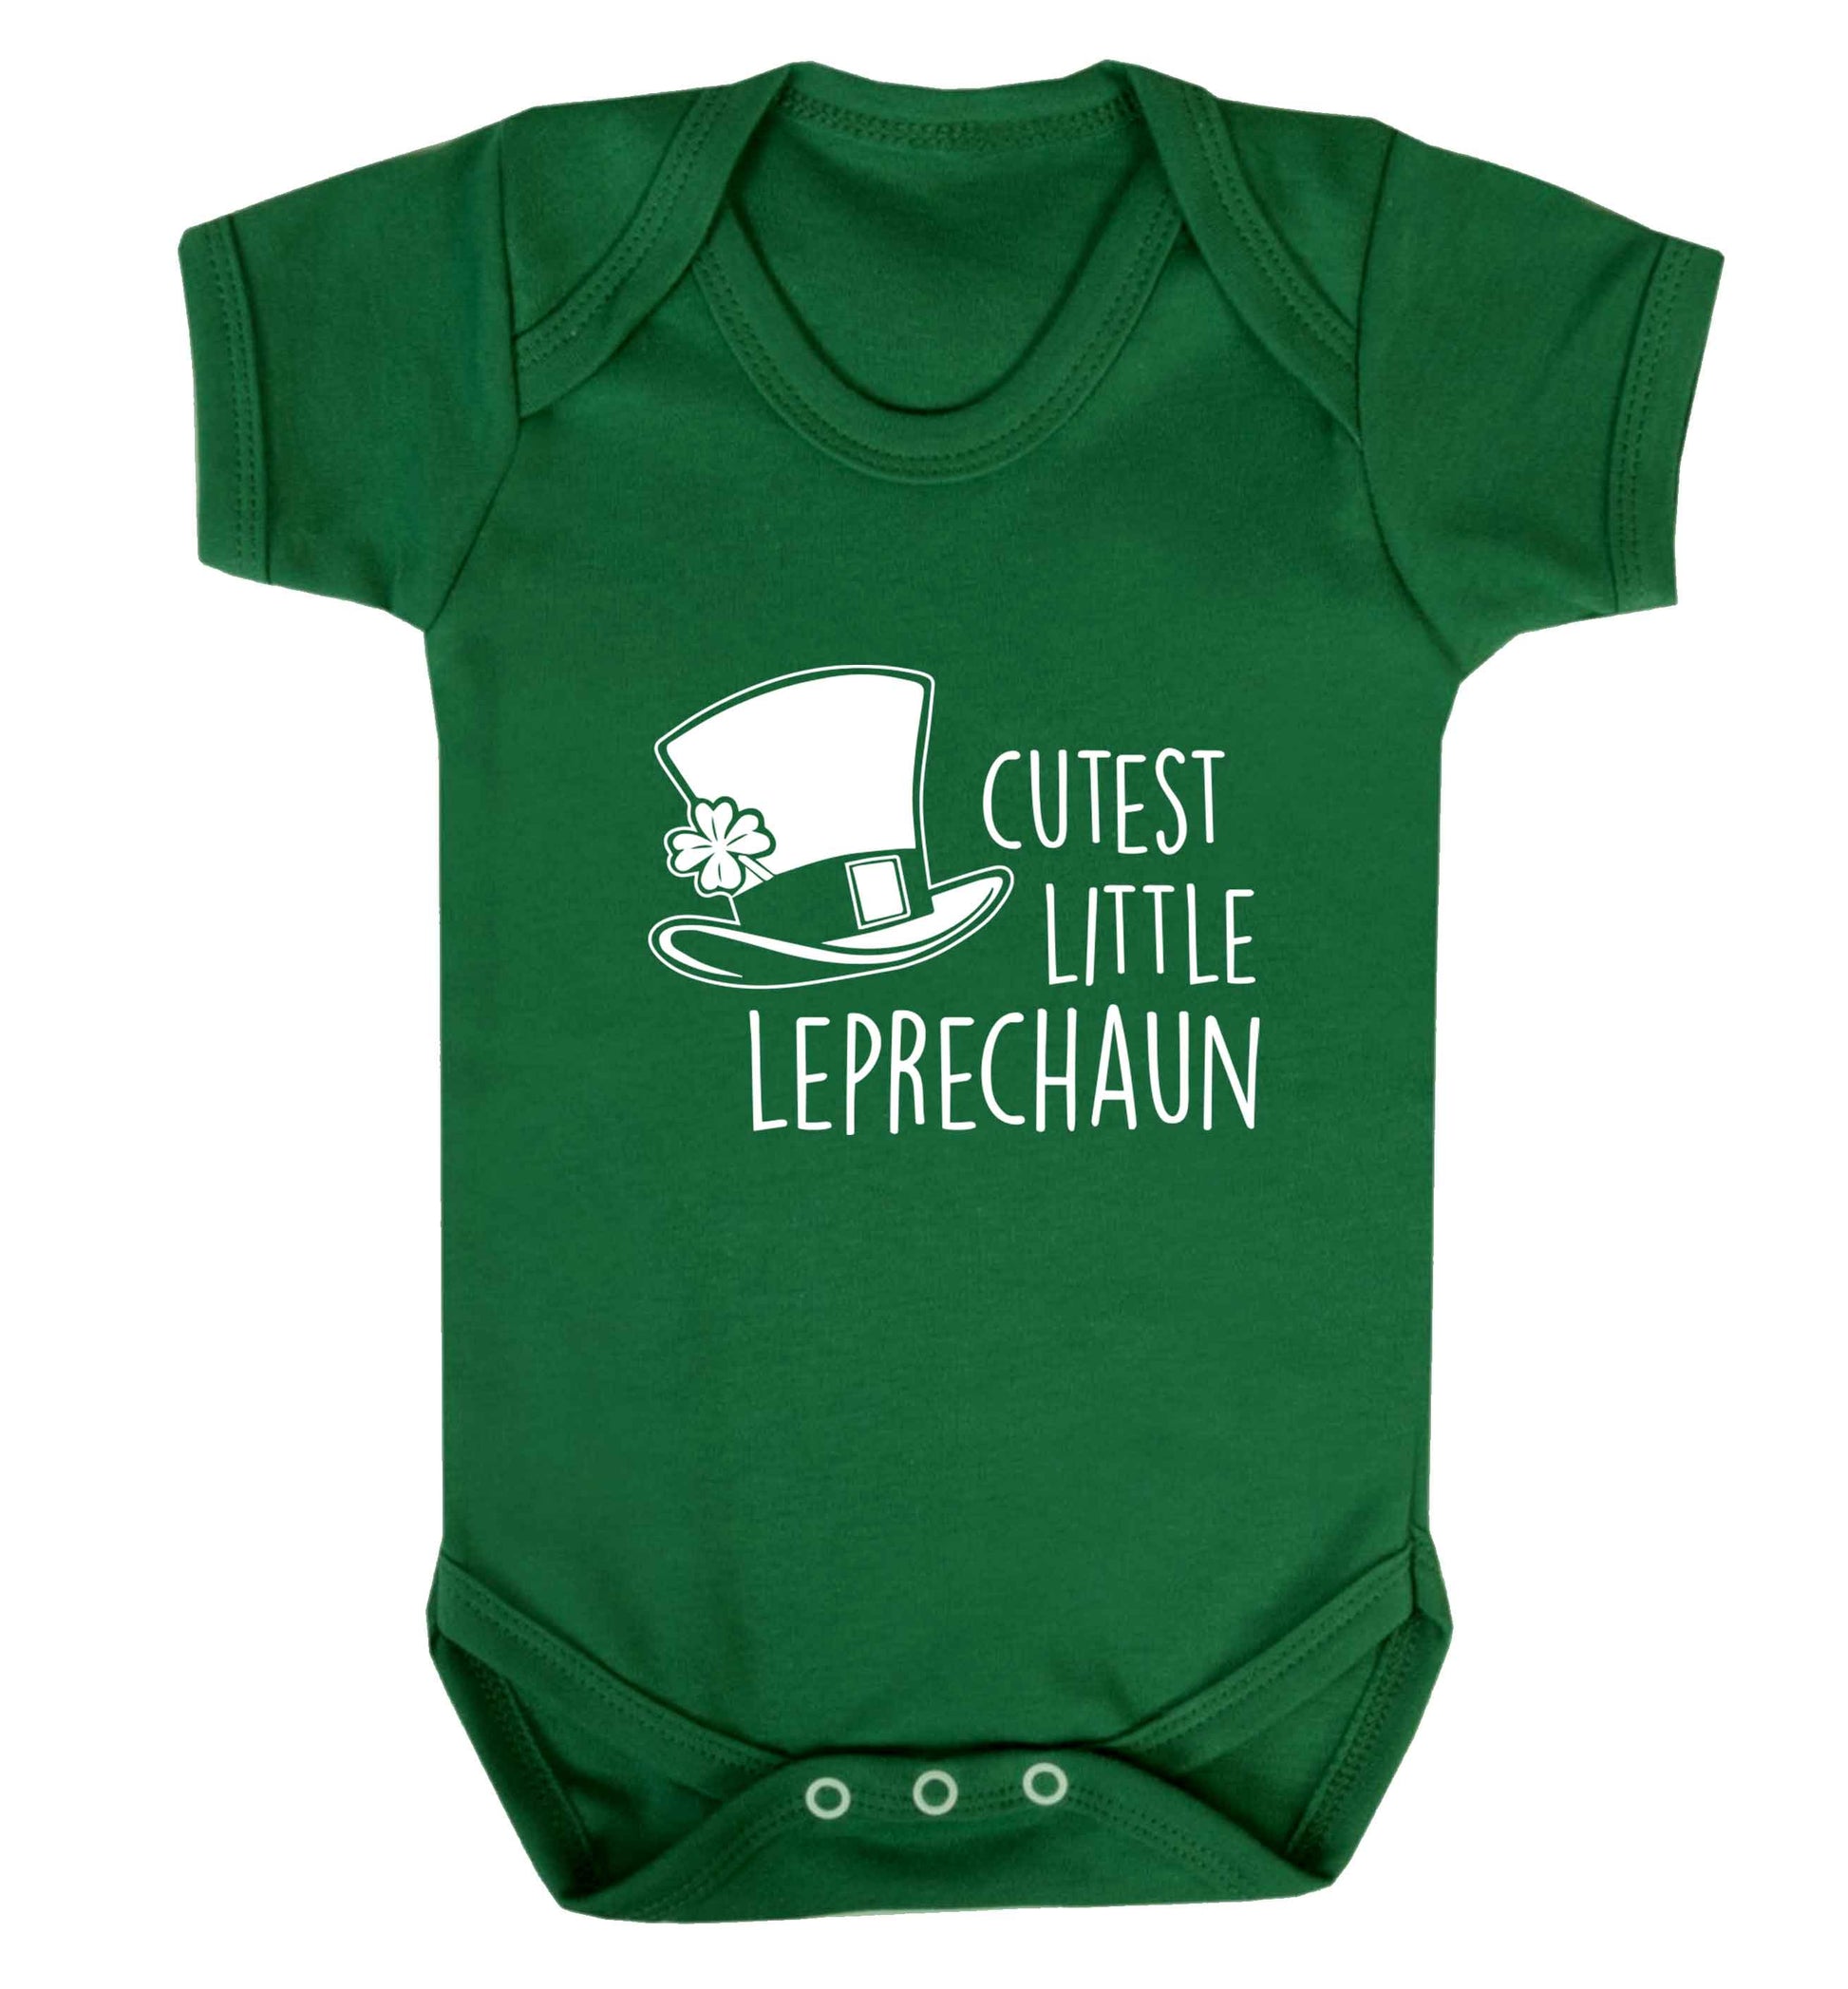 Cutest little leprechaun baby vest green 18-24 months